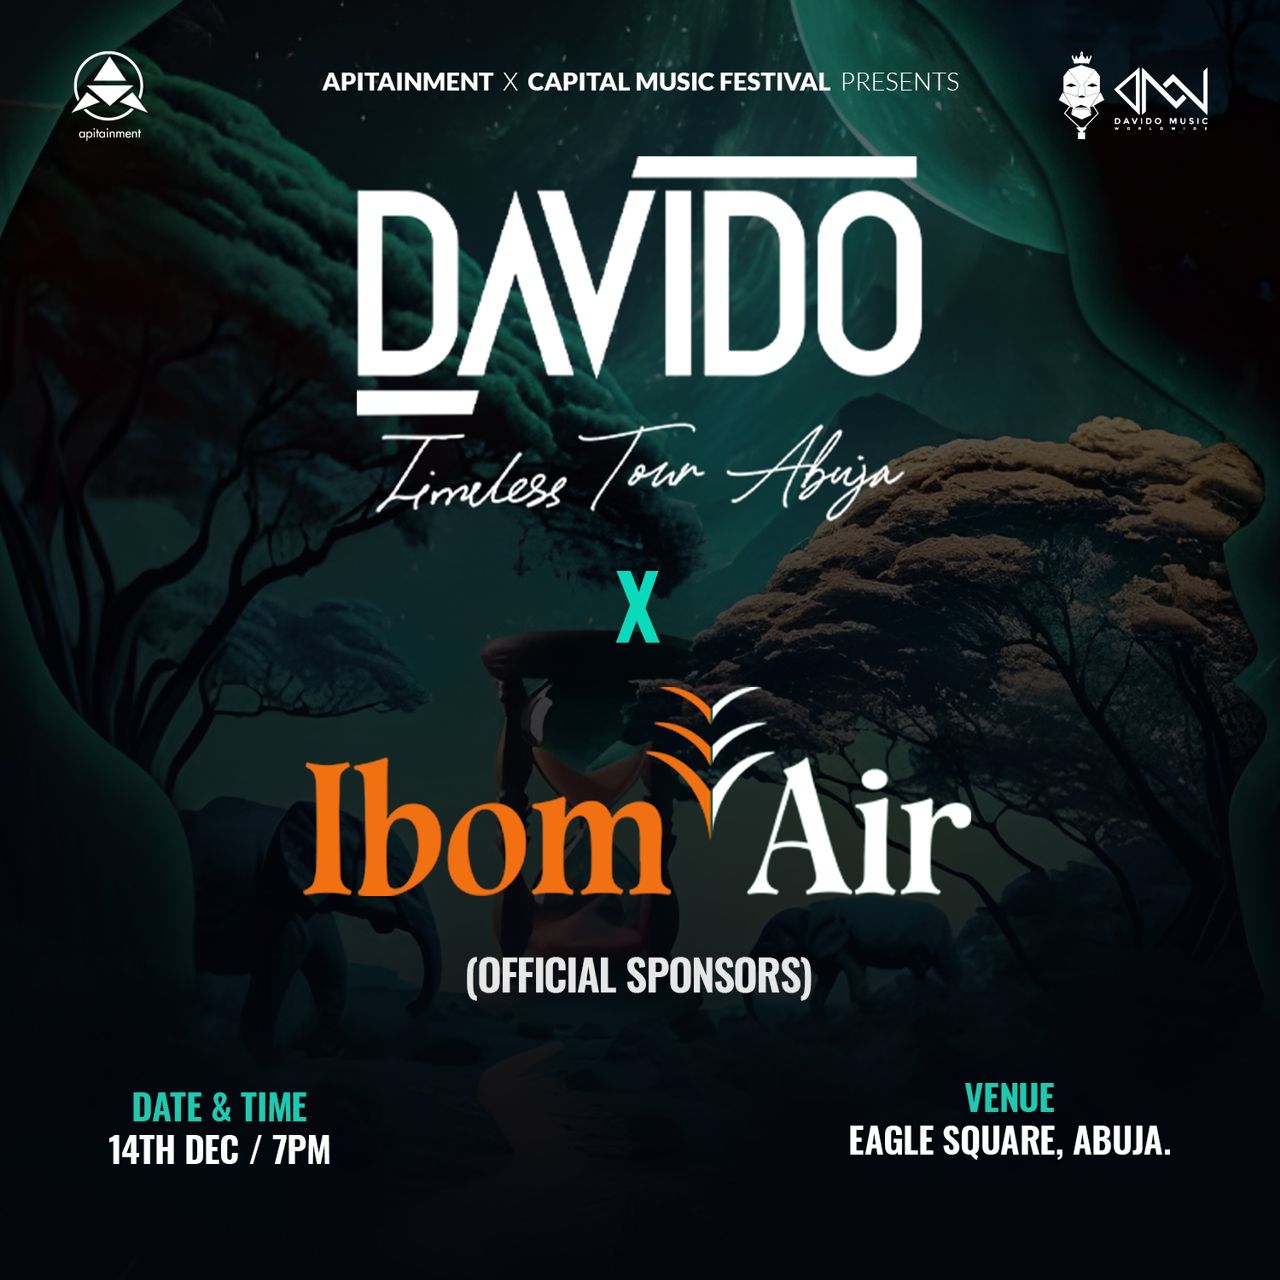 Davido’s Timeless Concert Abuja